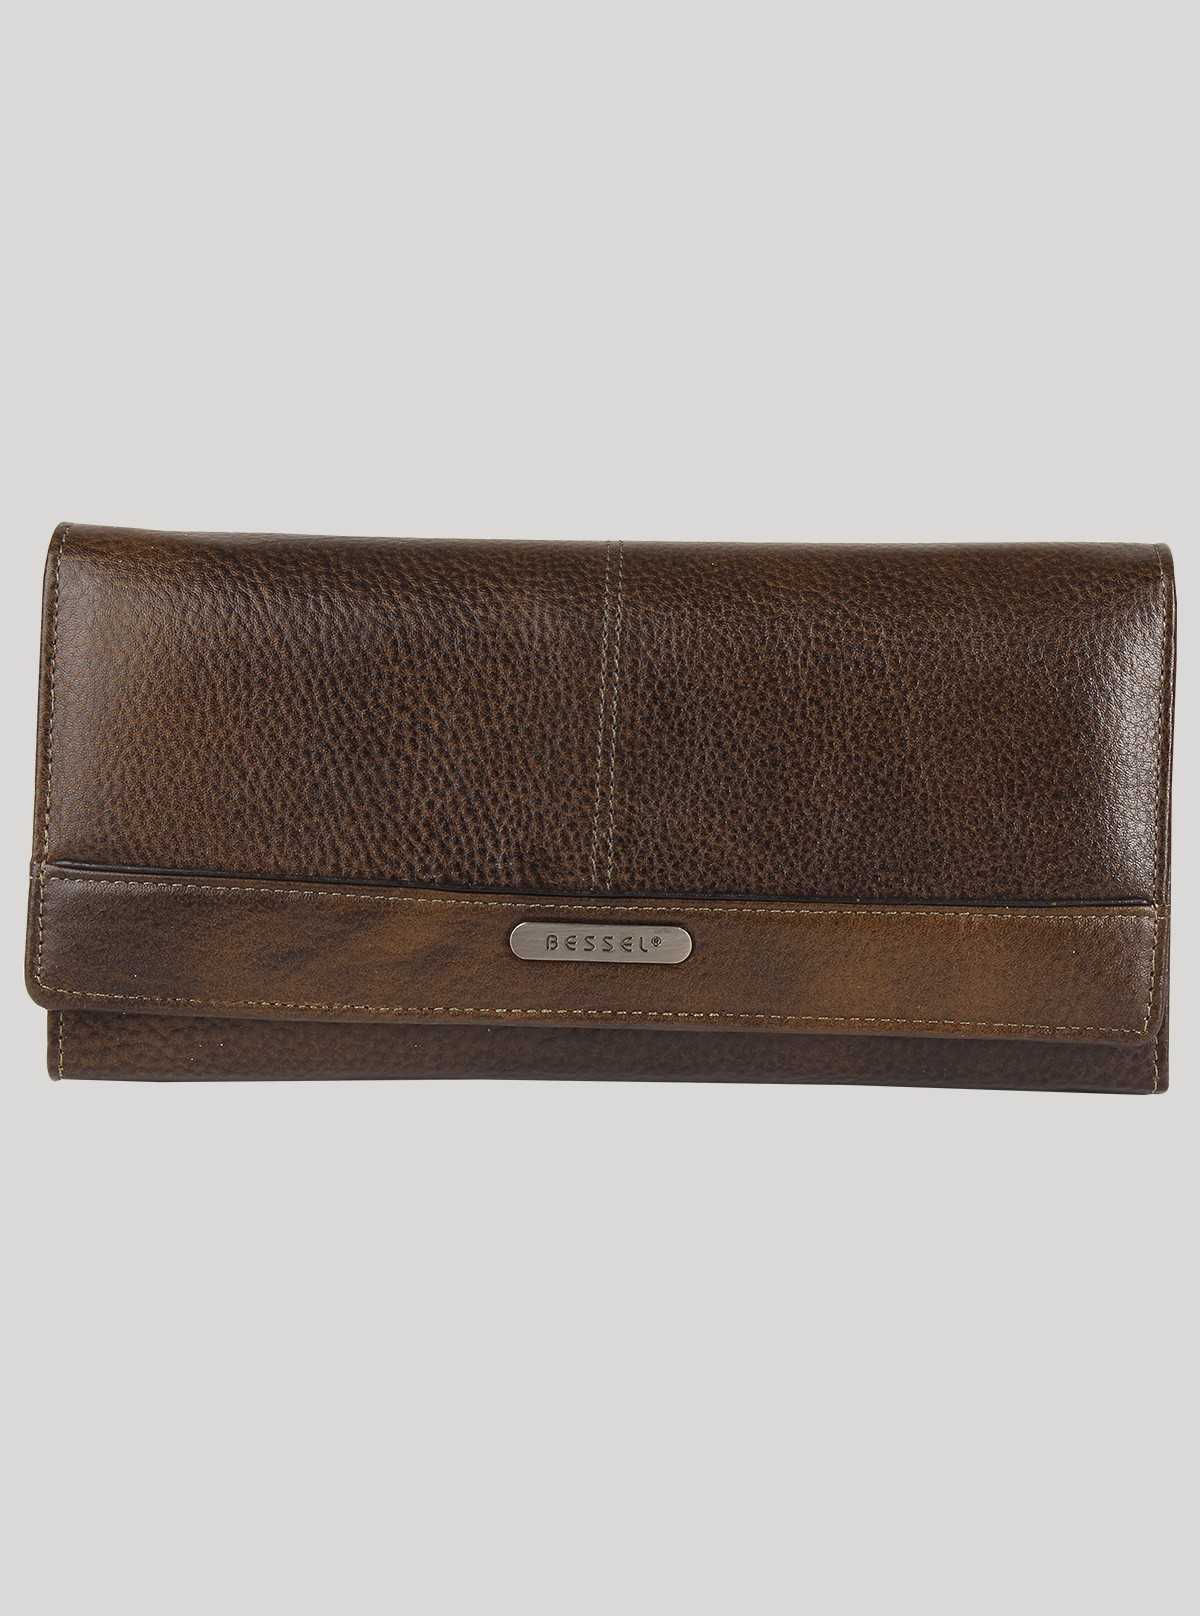 light grey leather wallet,leather wallet,womens wallet